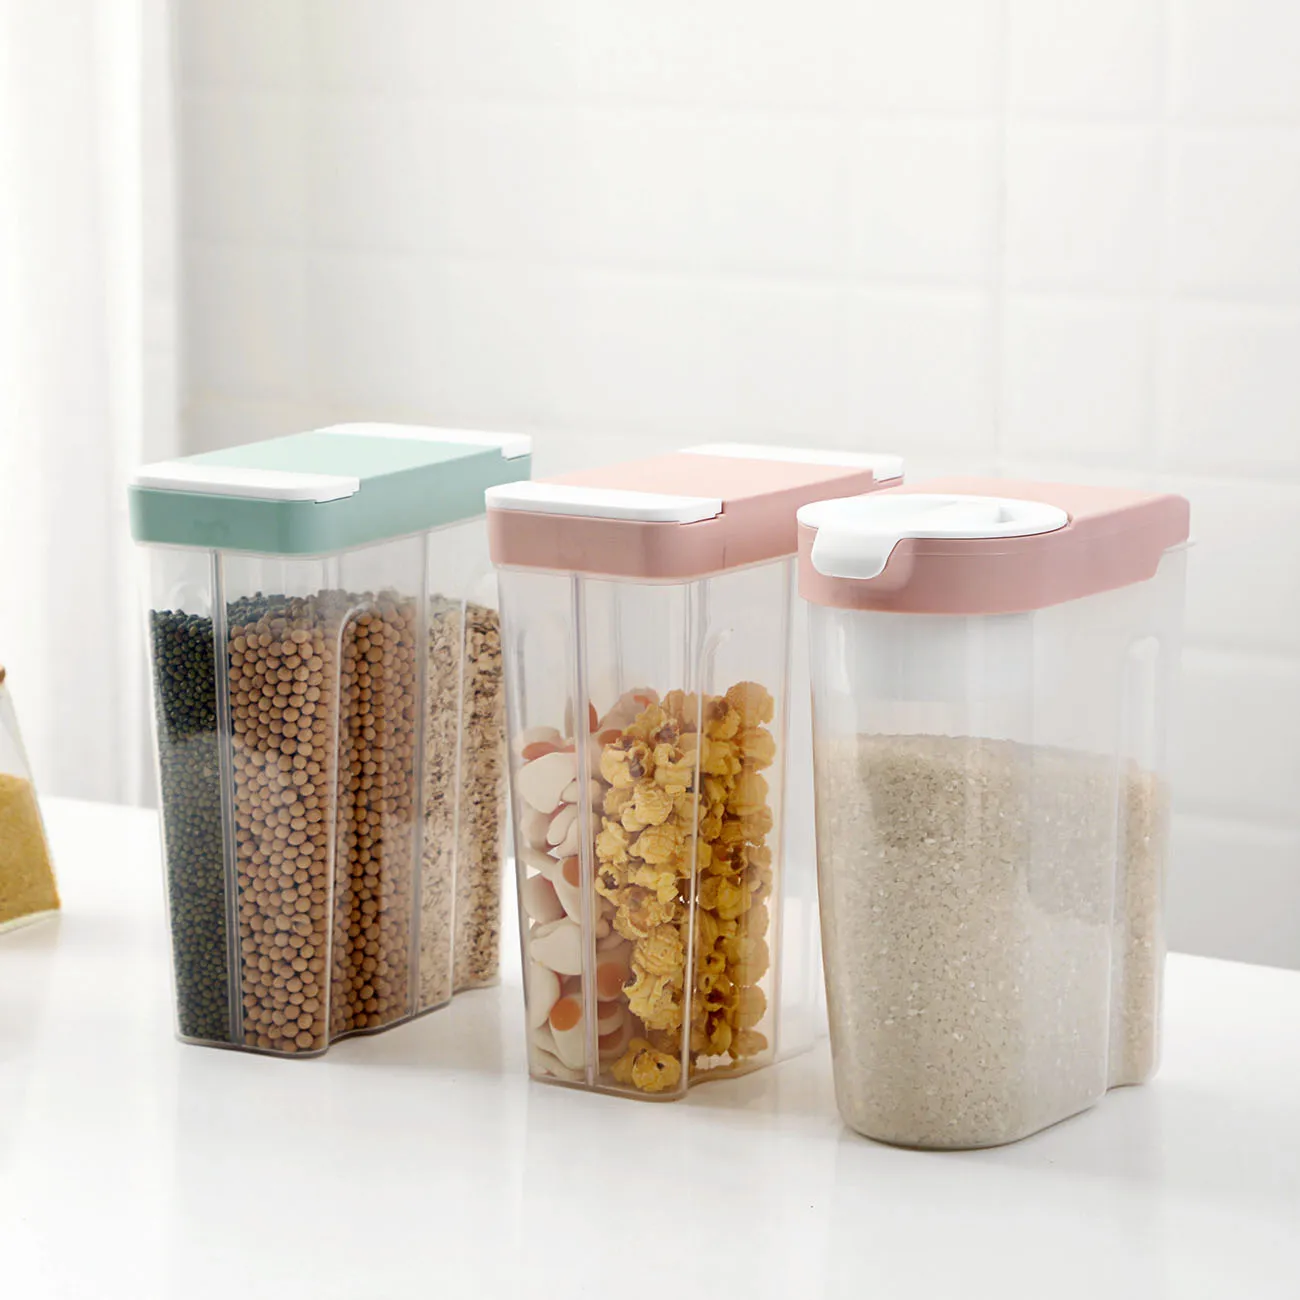 https://ae01.alicdn.com/kf/H8d7145c61d1f42e181adbf59e75570856/Plastic-Food-Storage-Box-Bulk-Food-Container-Grain-Tank-Cereal-Dispenser-Clear-Box-Nut-Jar-Rice.jpg